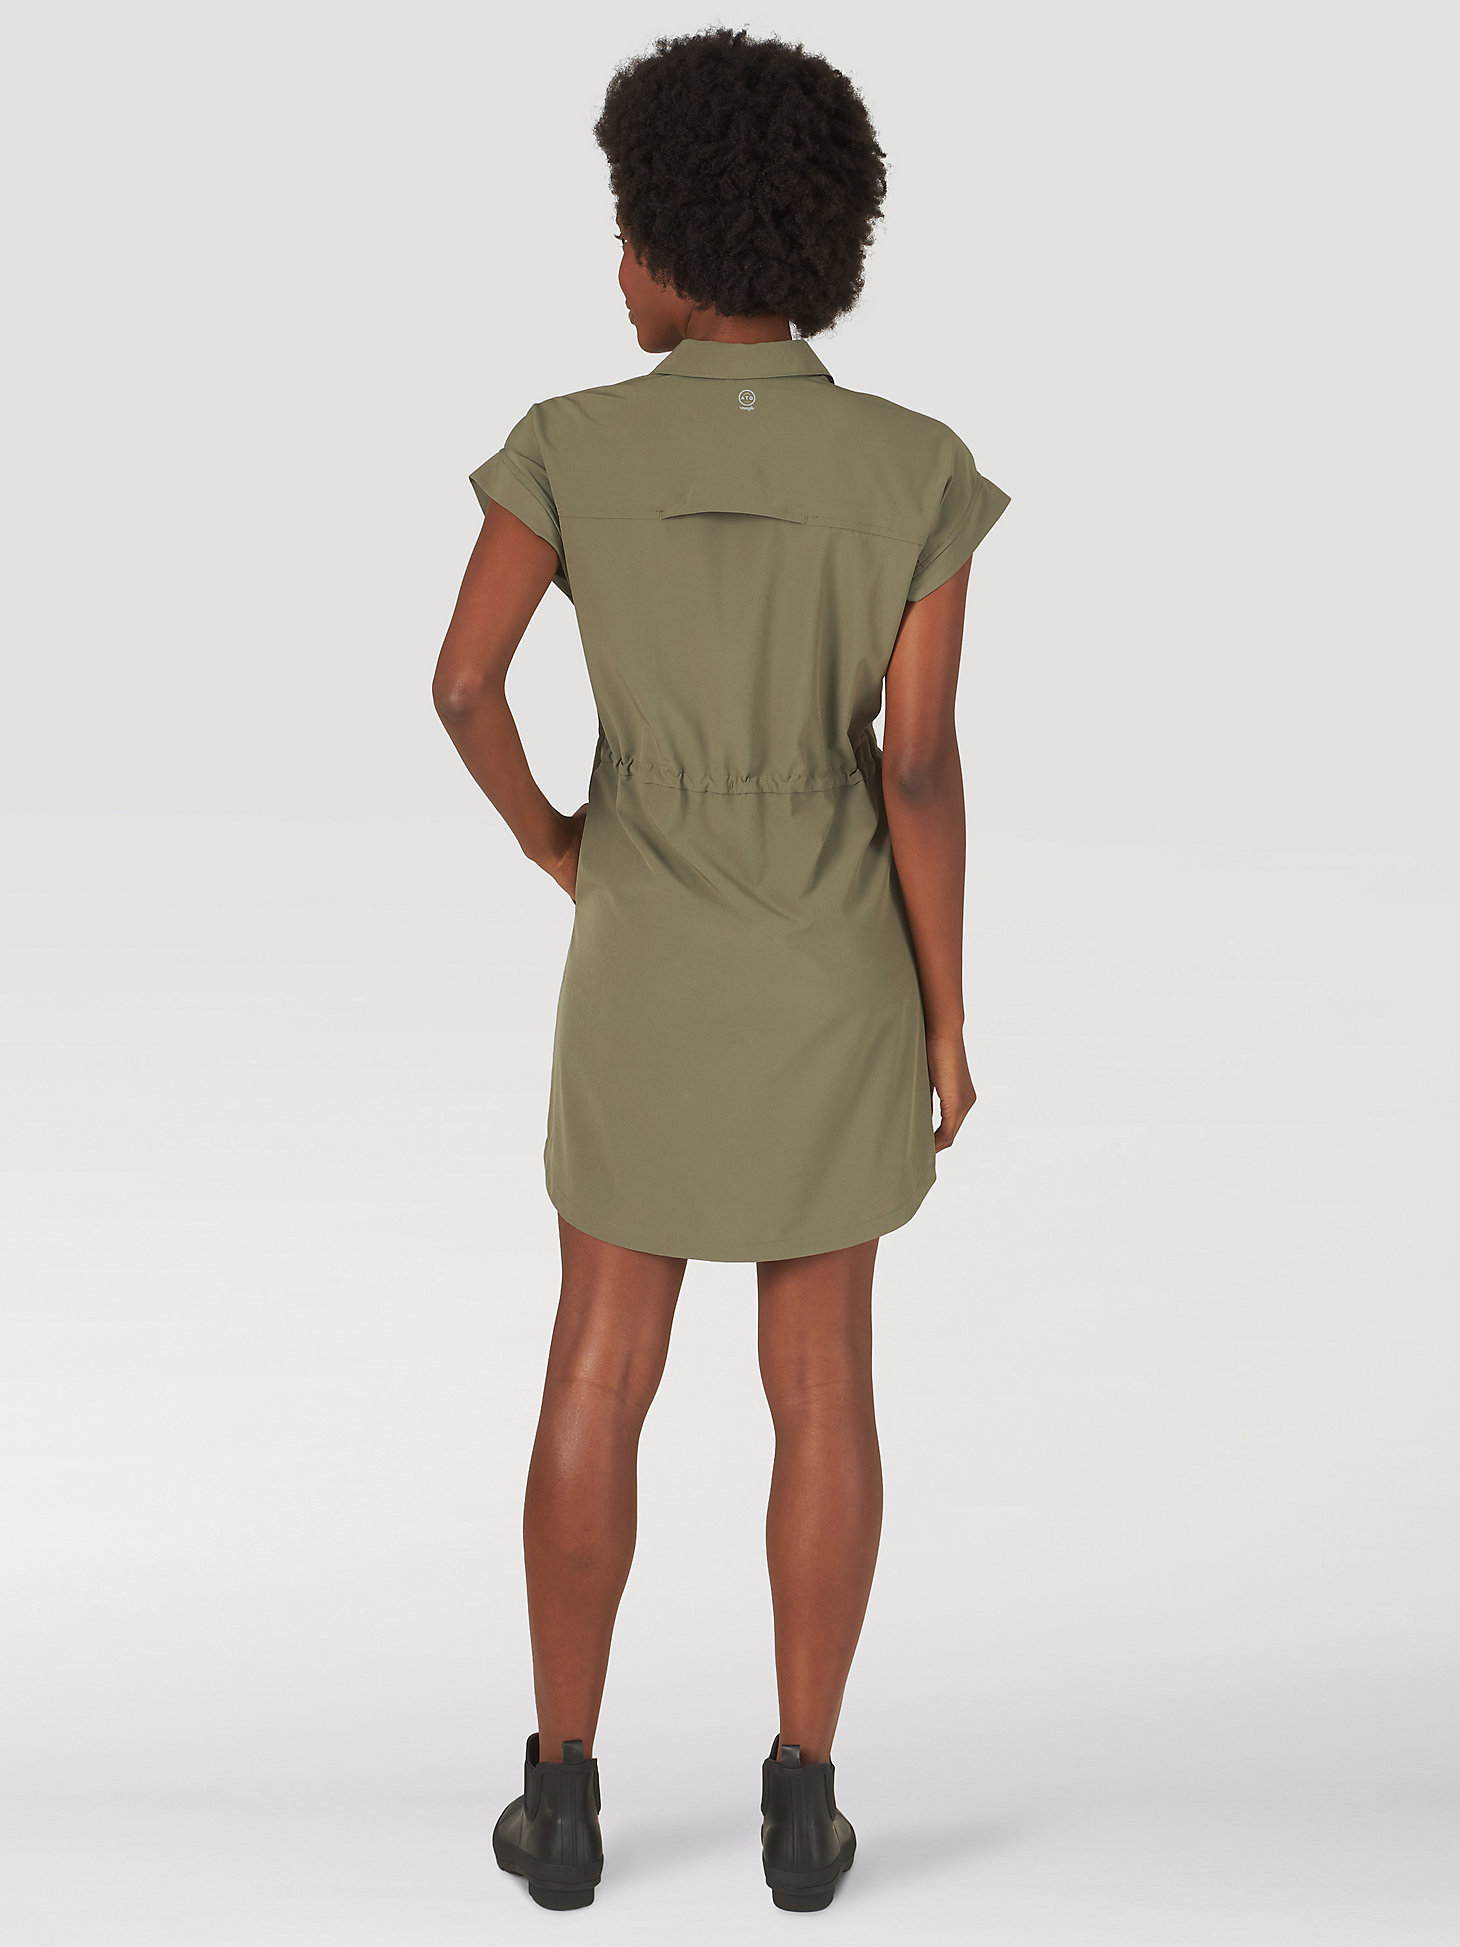 ATG By Wrangler™ Women's Angler Dress in Dusty Olive alternative view 1